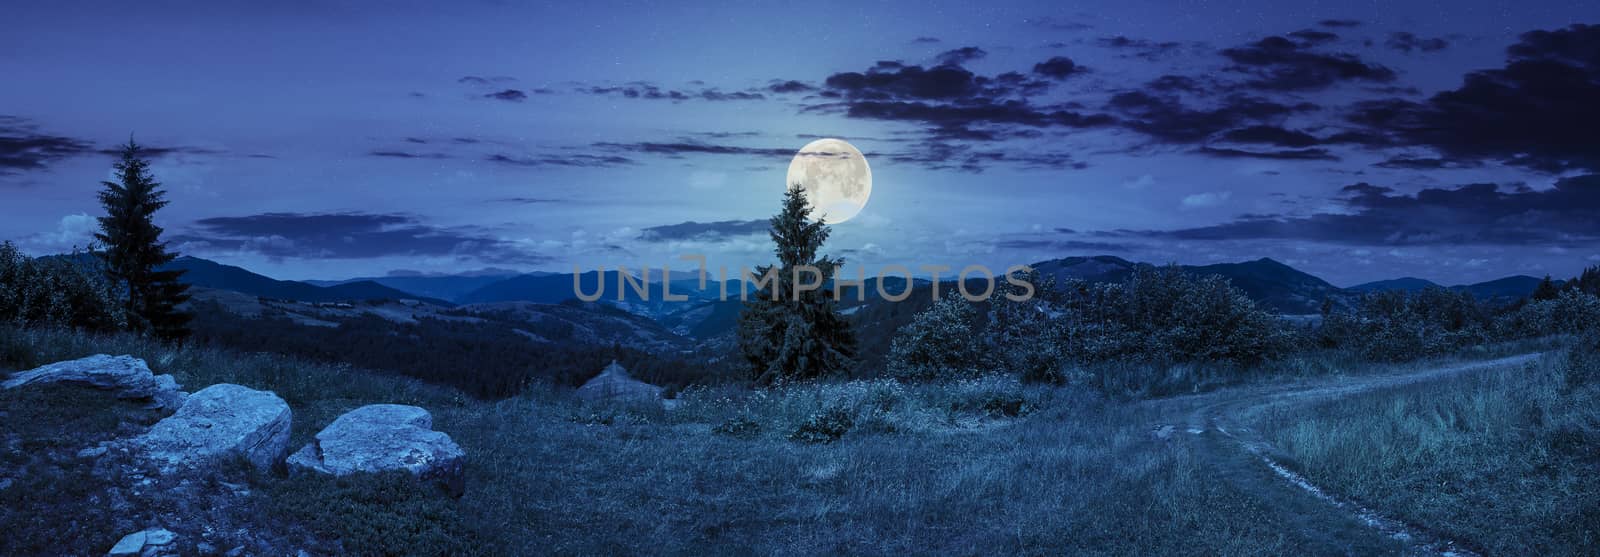 boulders on hillside meadow in mountain at night by Pellinni